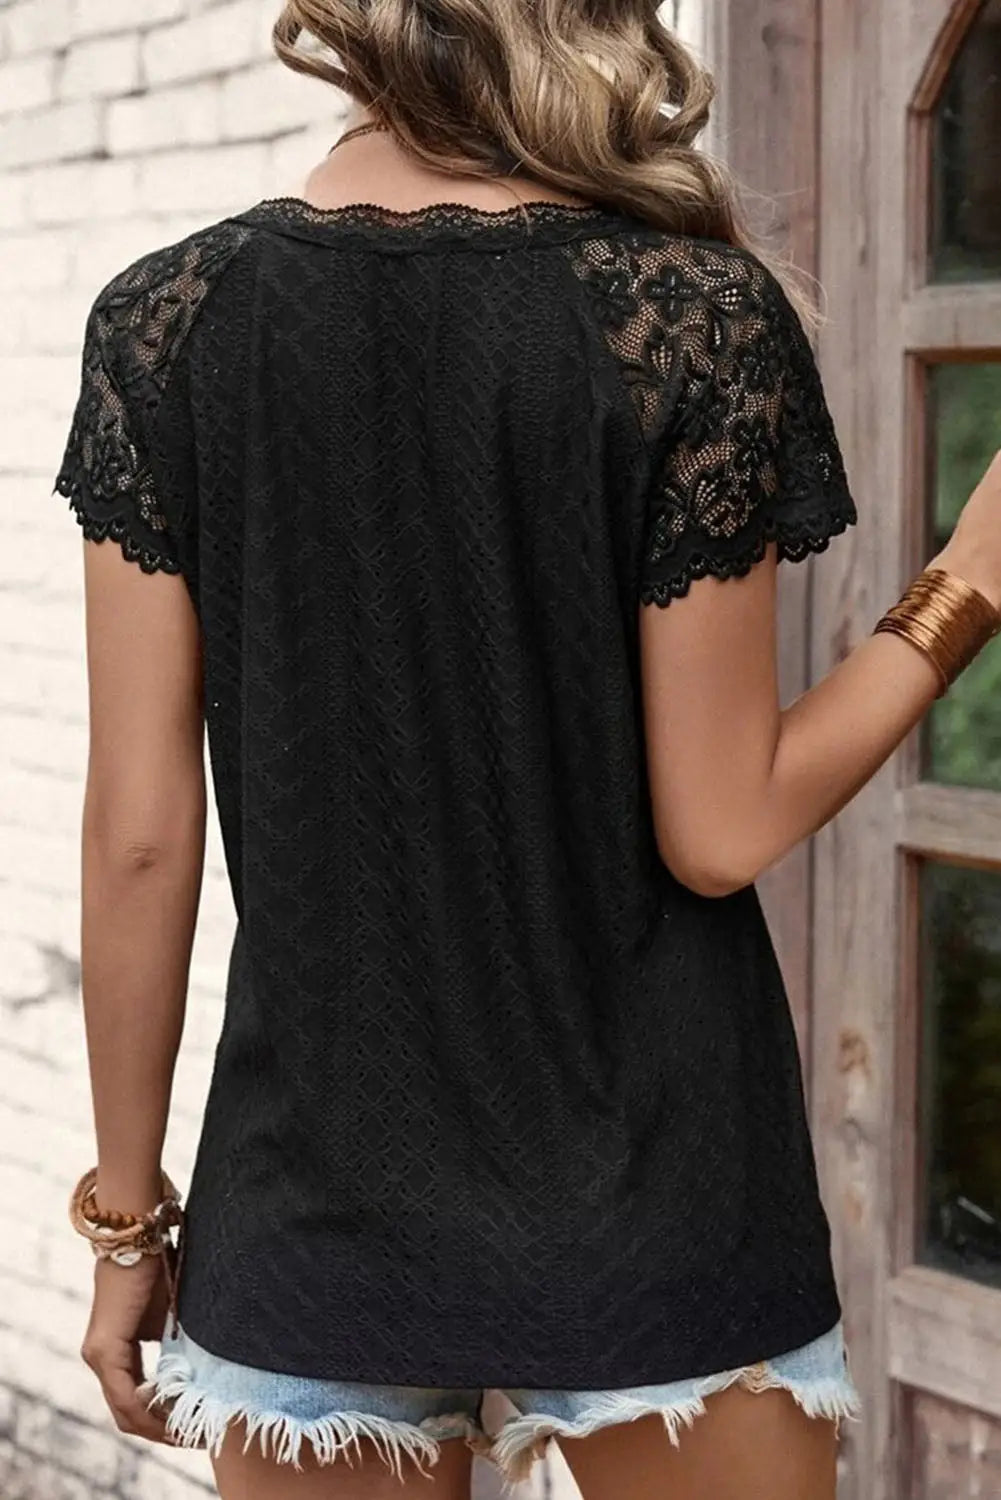 Black lace short-sleeve scalloped v-neck top - tops